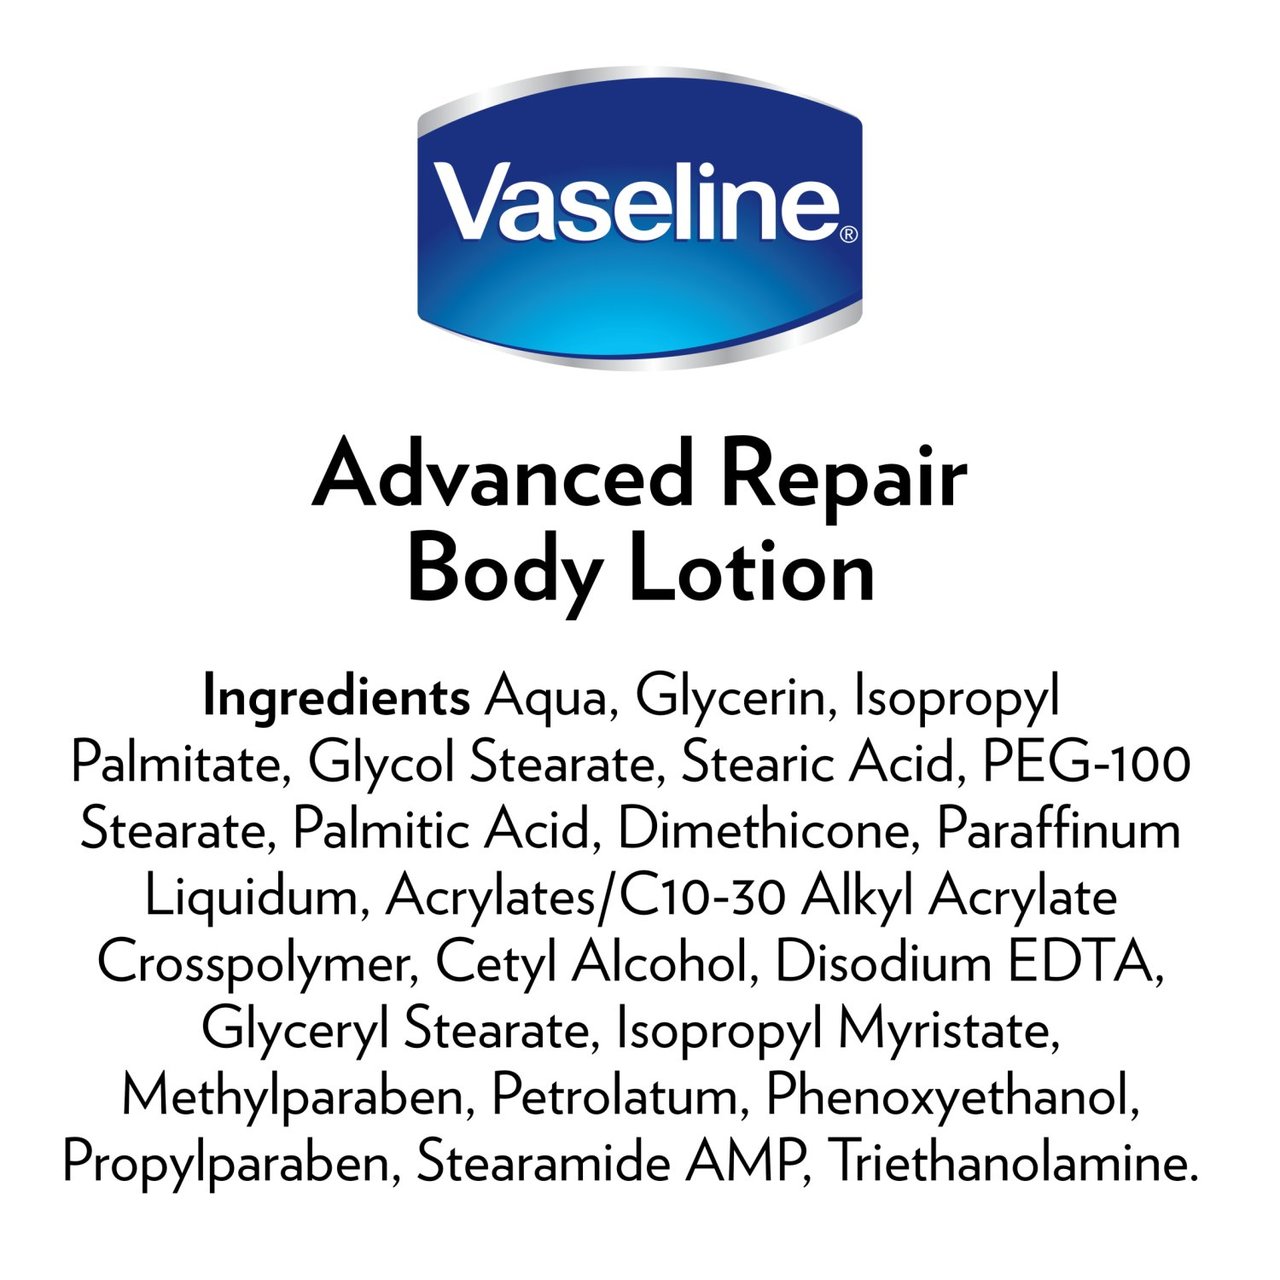 Vaseline Intensive Care Advanced Repair Lotion 400ml